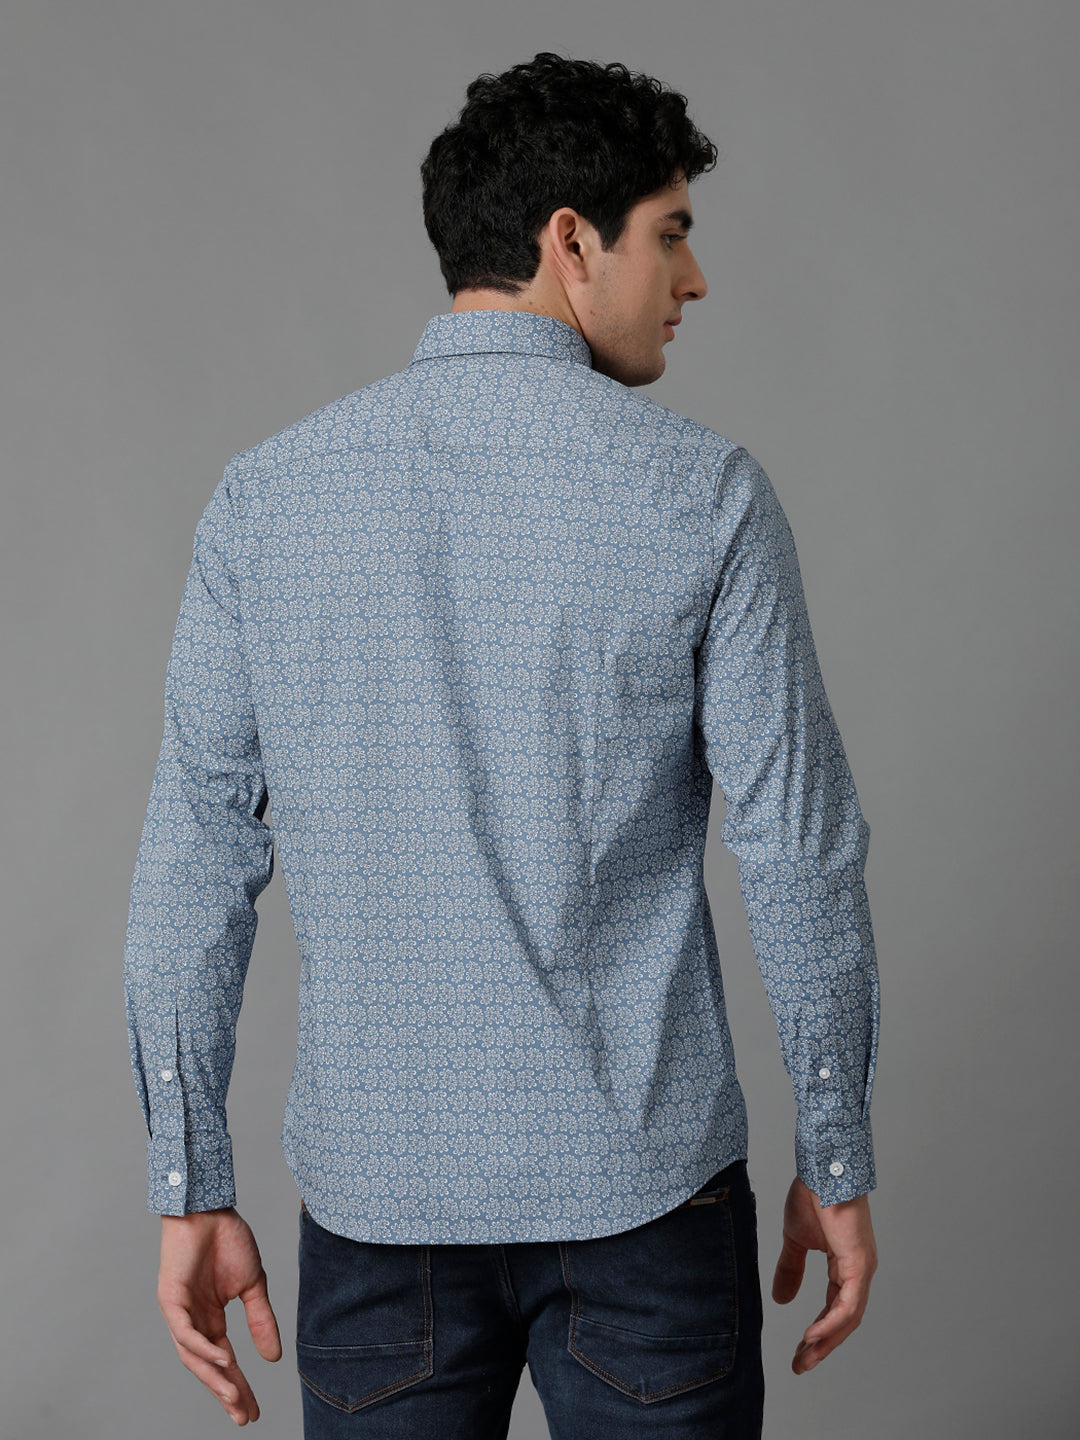 Aldeno Mens Slim Fit Abstract Aop Steel Blue Cotton Blend Stretch Shirt (TIZIO)